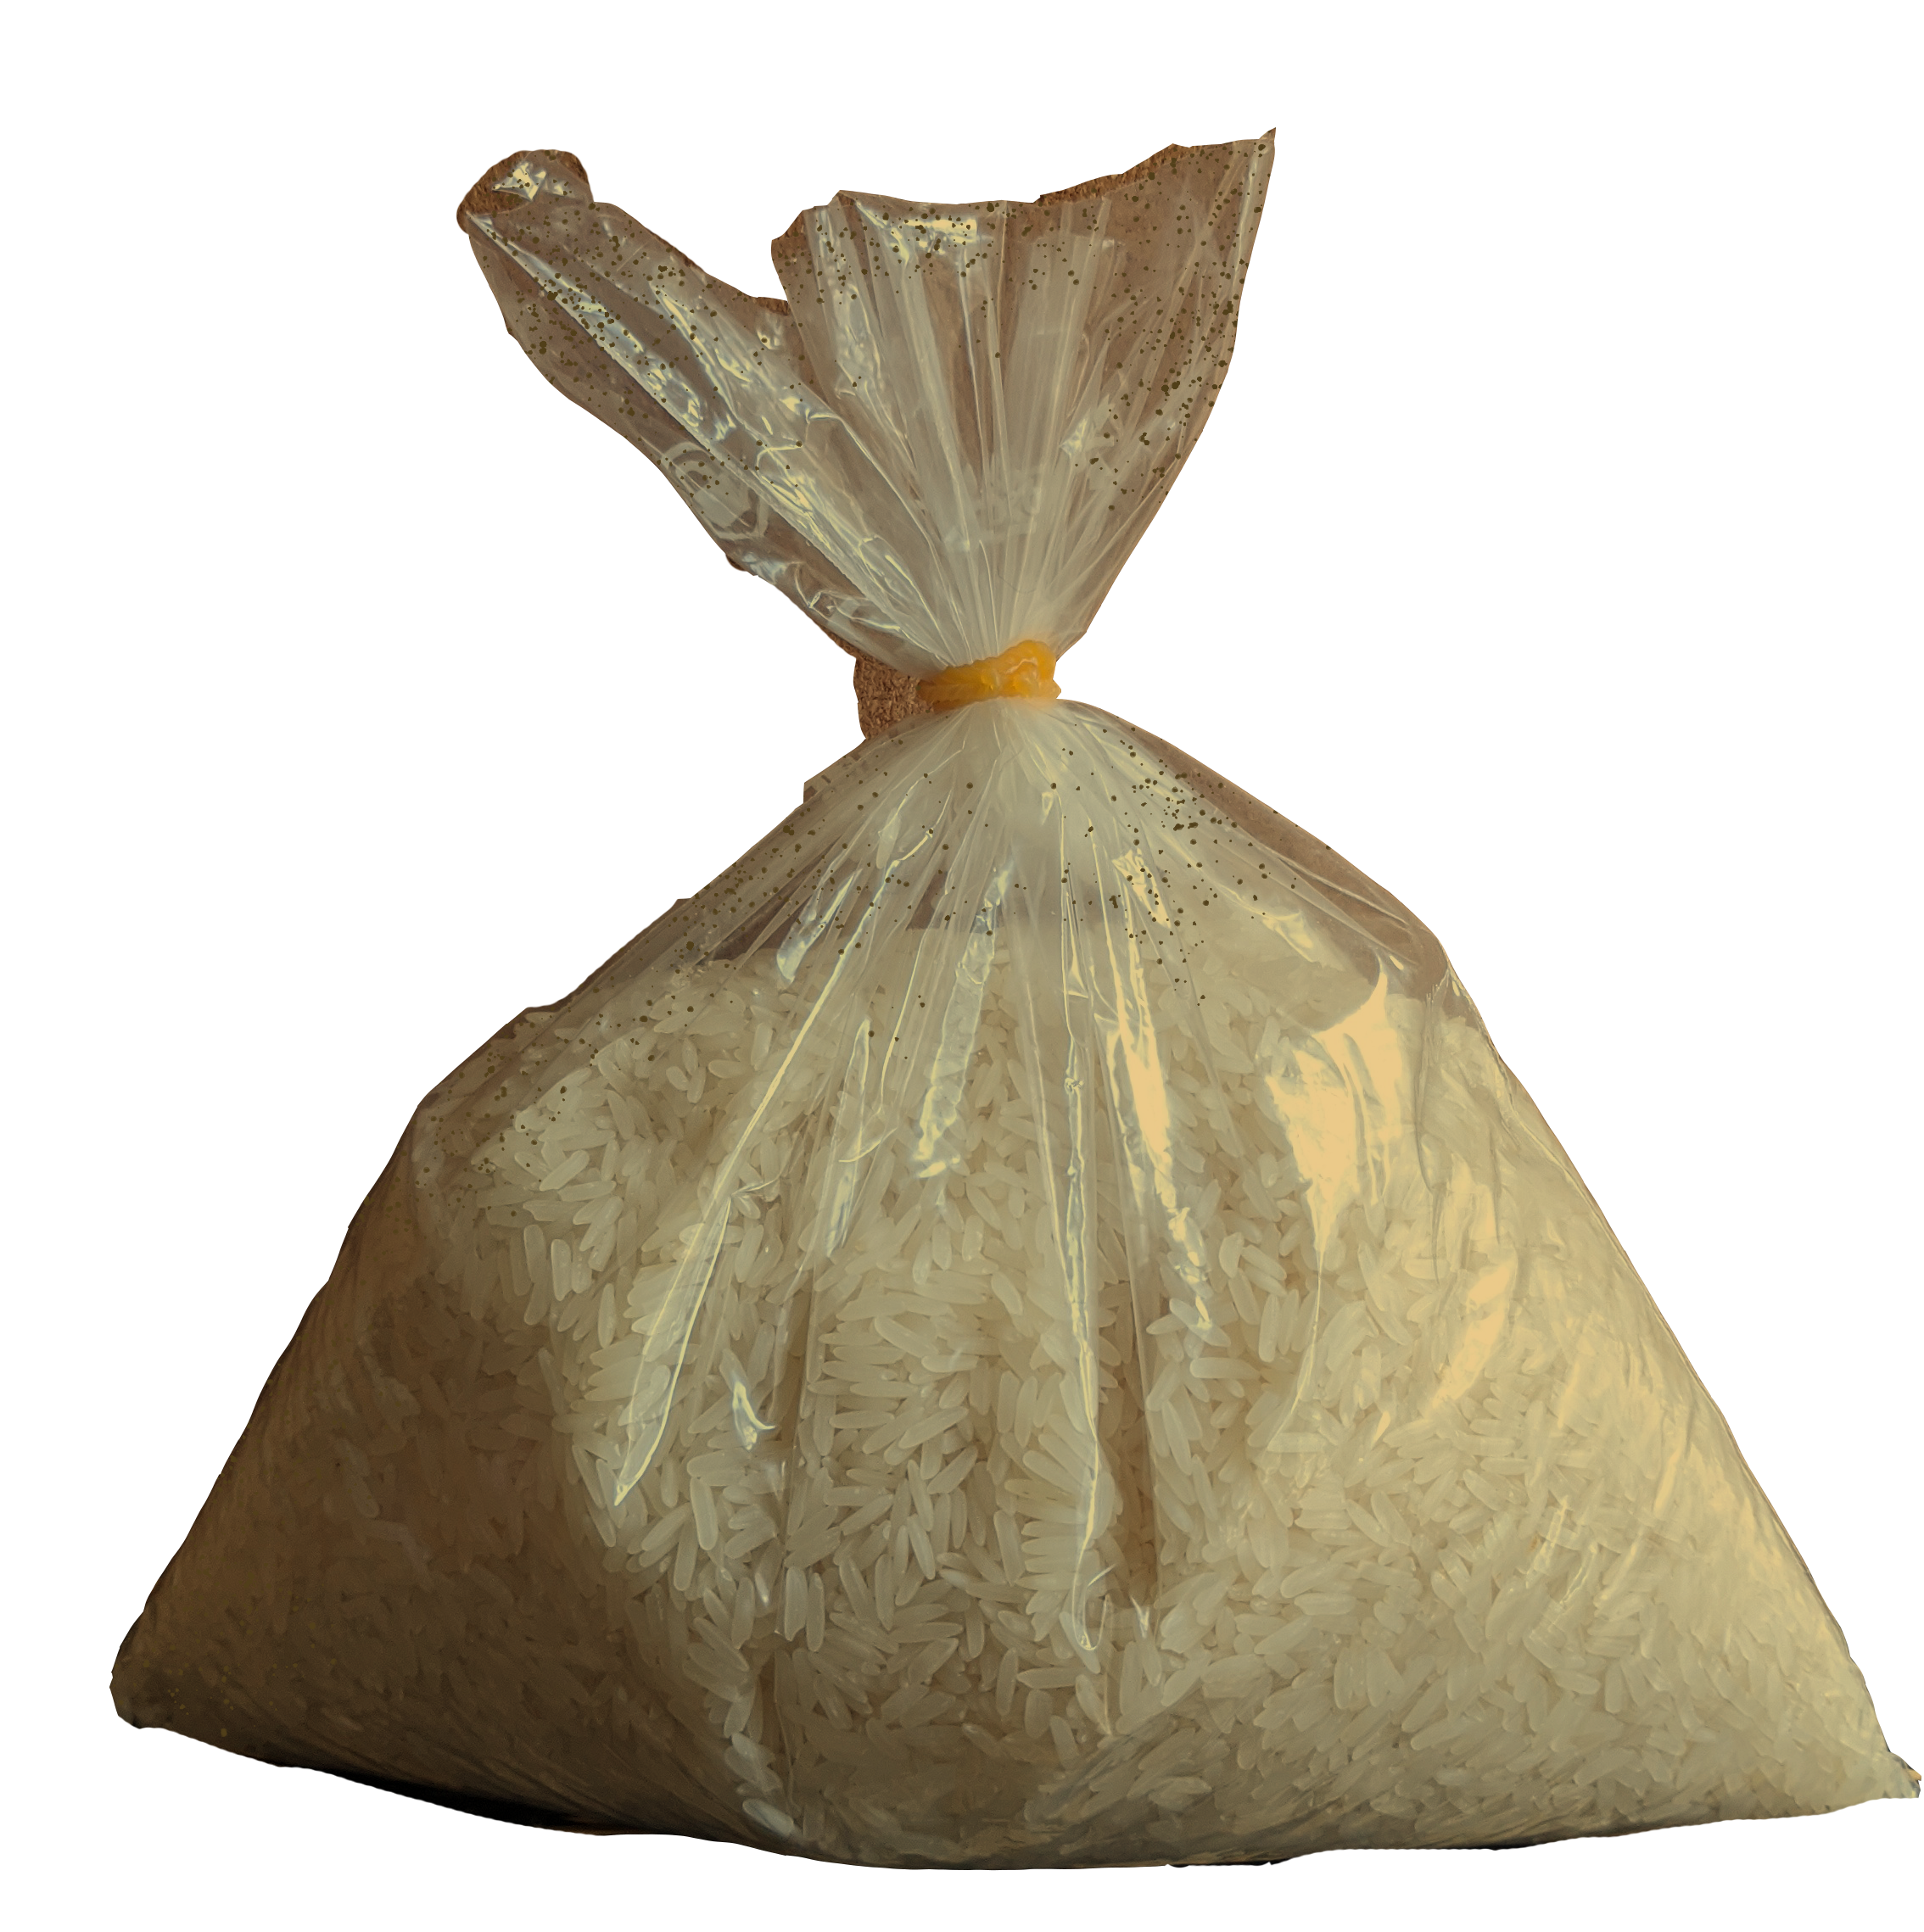 bag of rice